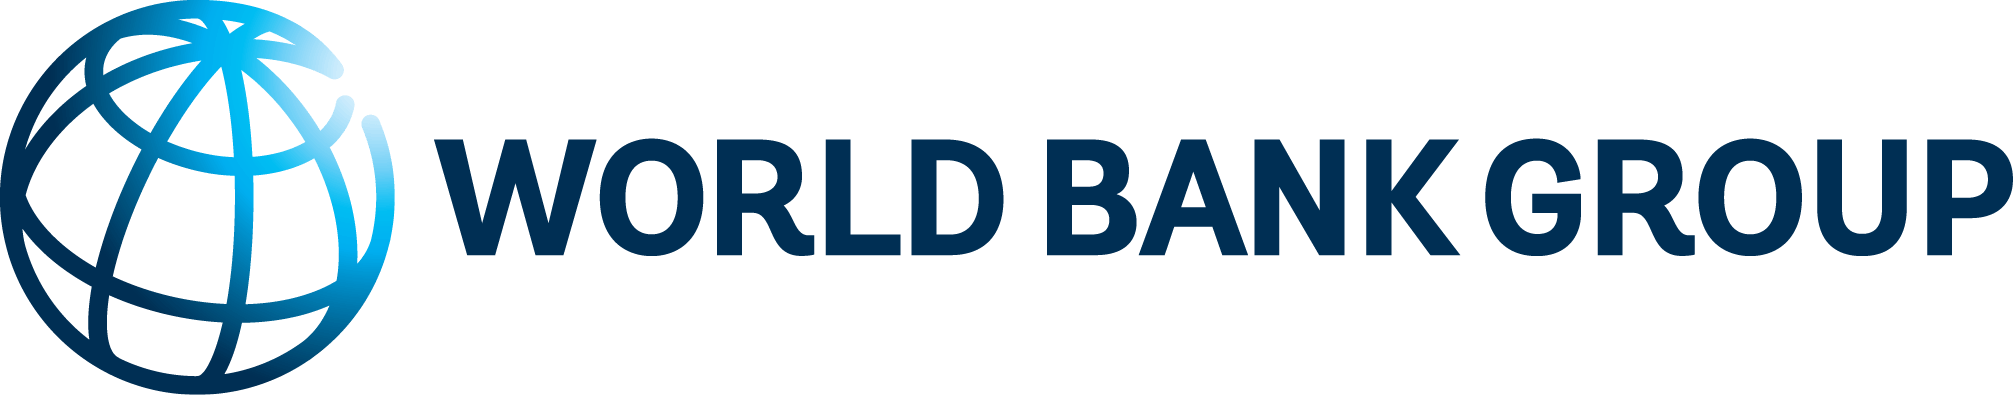 World Bank Logo - Terms of Use